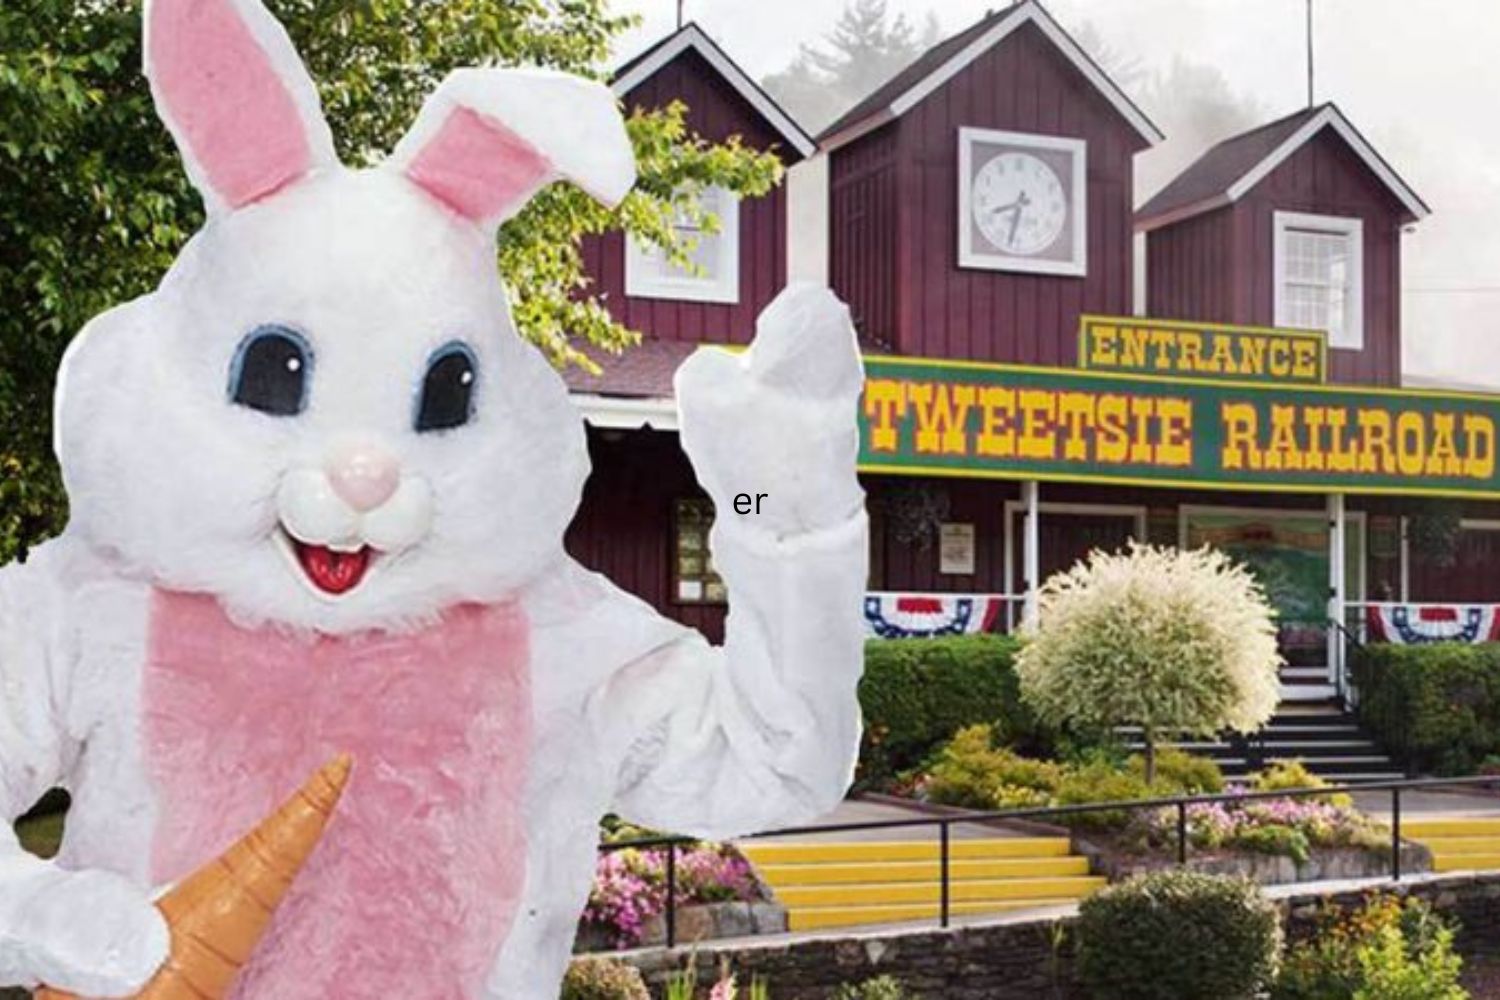 Tweetsie Railroad: Easter Bunny